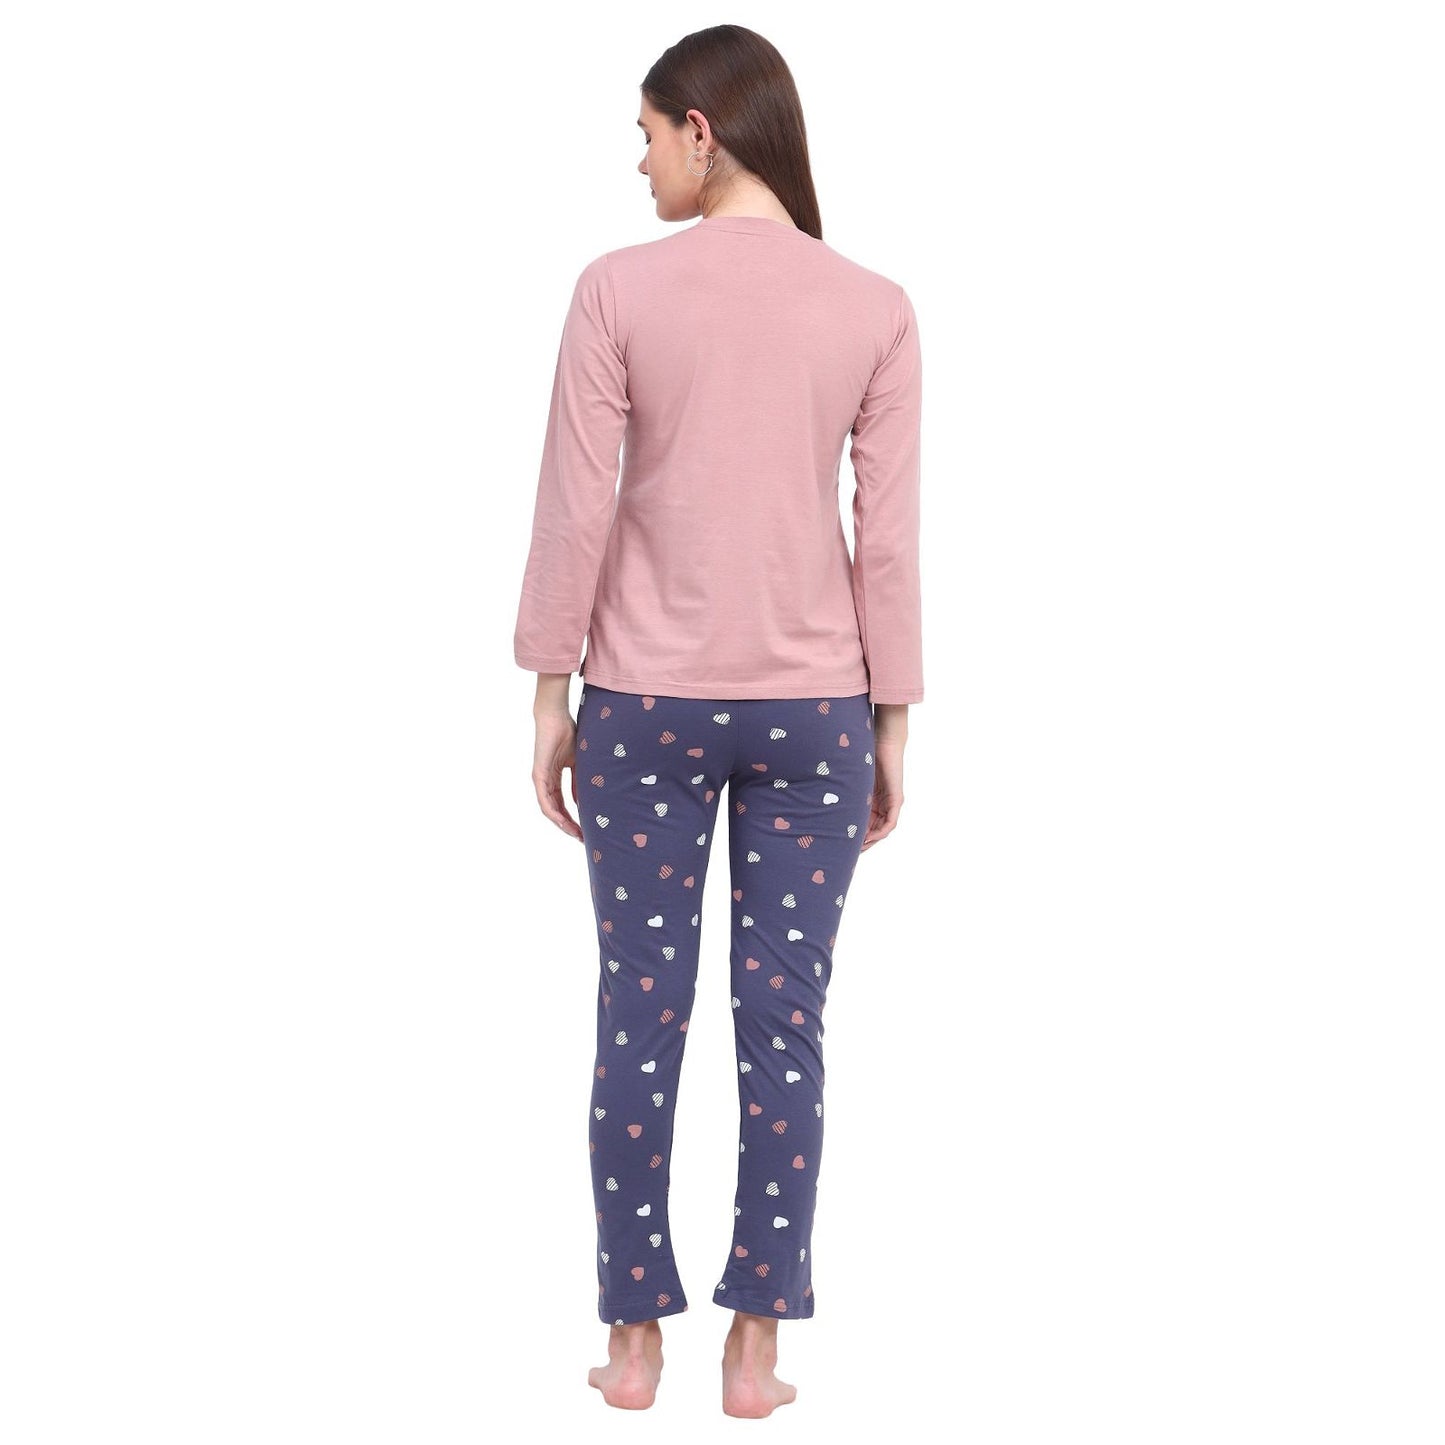 Evian Women's Cotton Heart Printed Stylish Night Suit Set of Top & Pyjama Ev14105- 